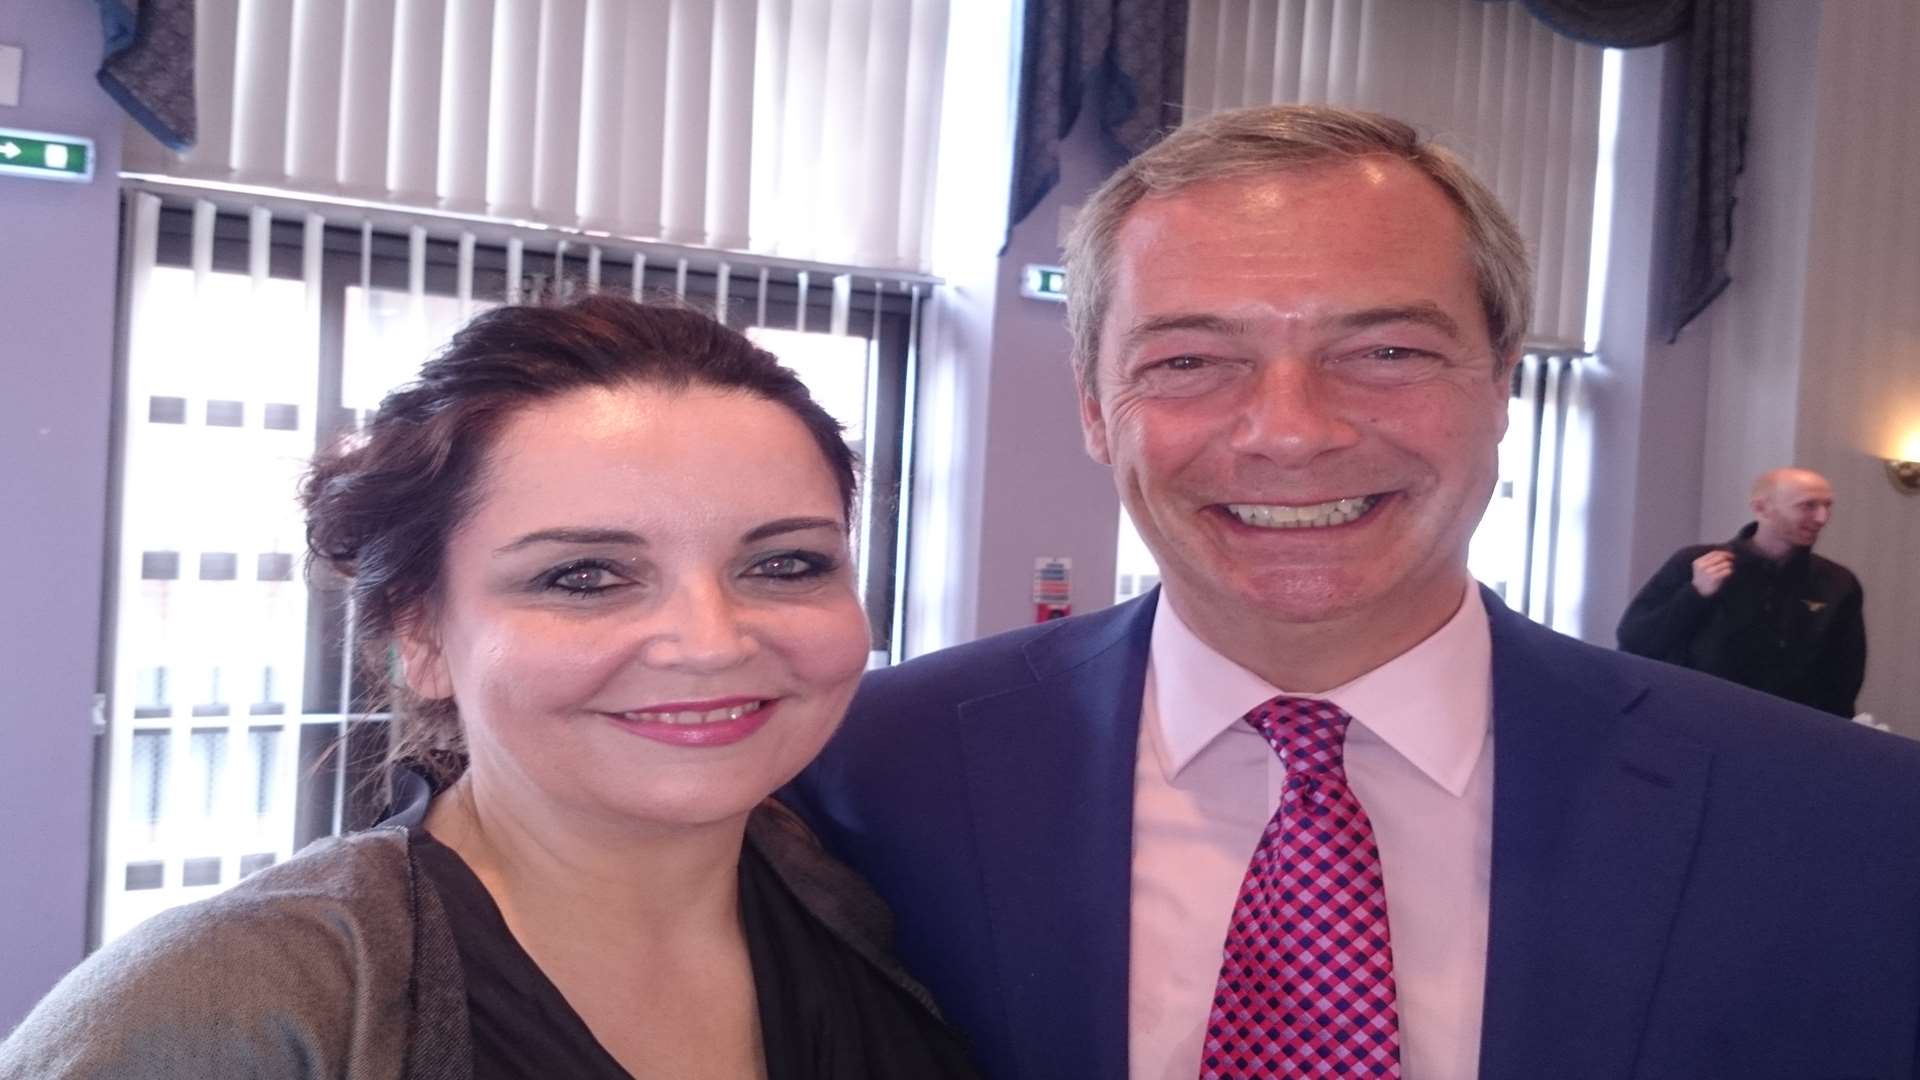 Dartford UKIP parliamentary candidate Elizabeth Jones with UKIP leader Nigel Farage in Nottingham at a Young Independents UKIP Conference in July 2015